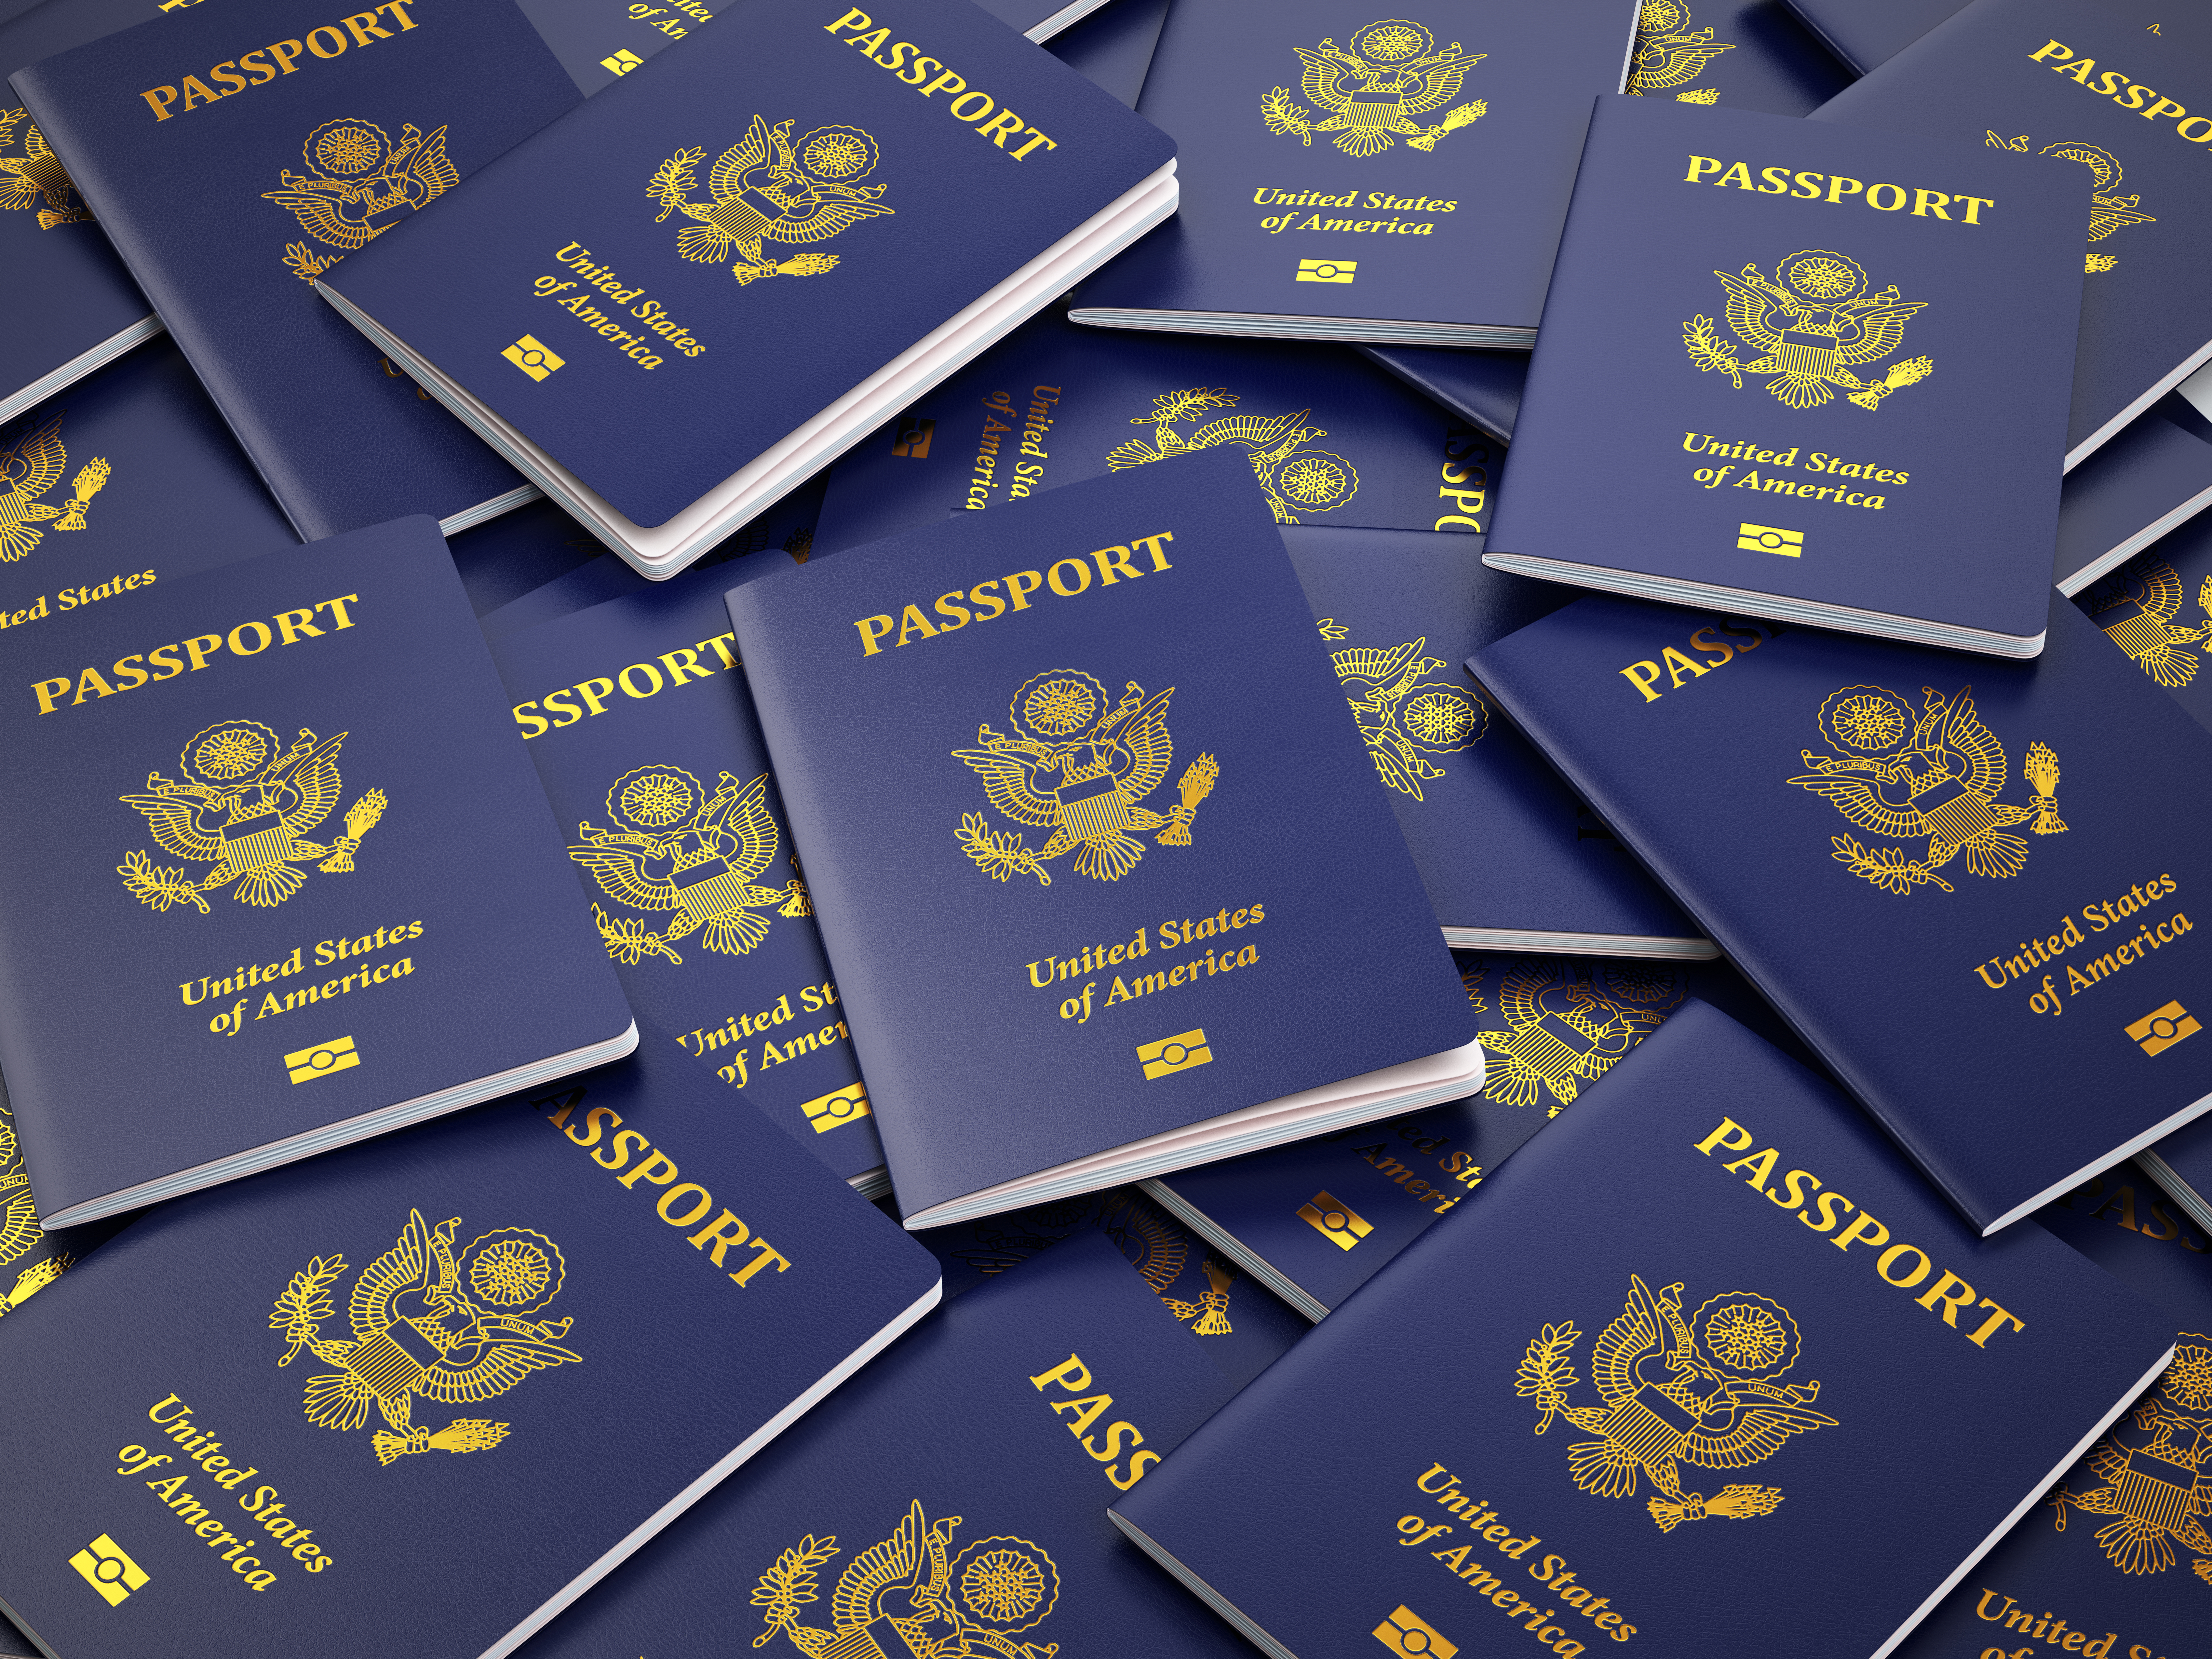 9 Hechos de pasaporte sorprendentes que necesita saber | Esta web - 3